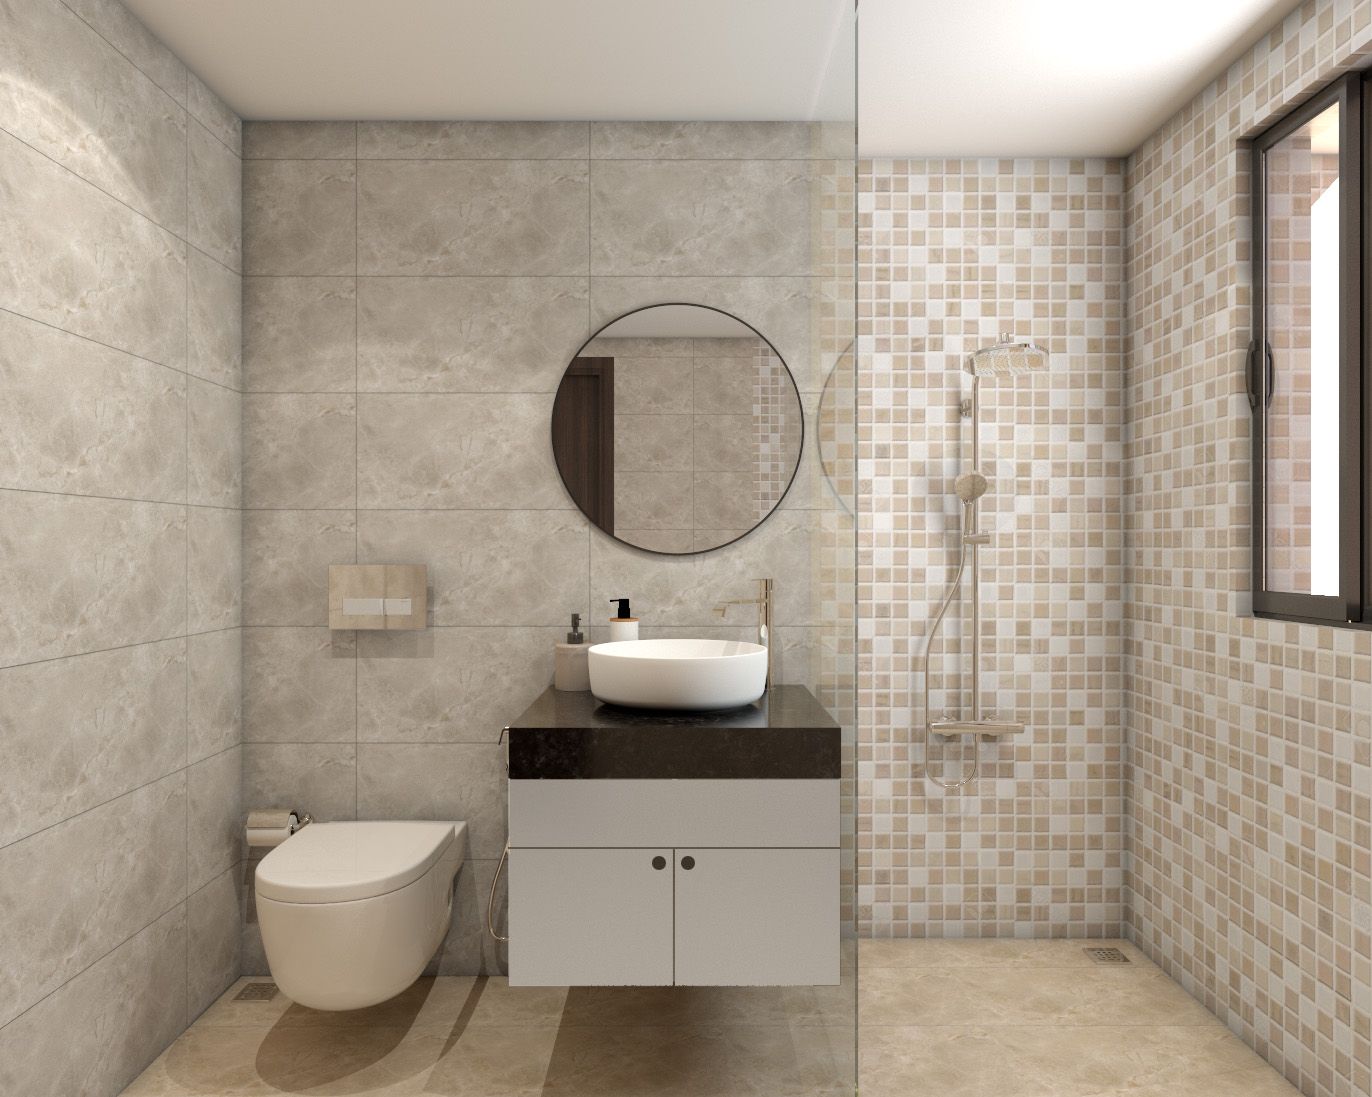 Contemporary Neutral-Toned Bathroom Design With Granite Bathroom Countertop And Dual Walls